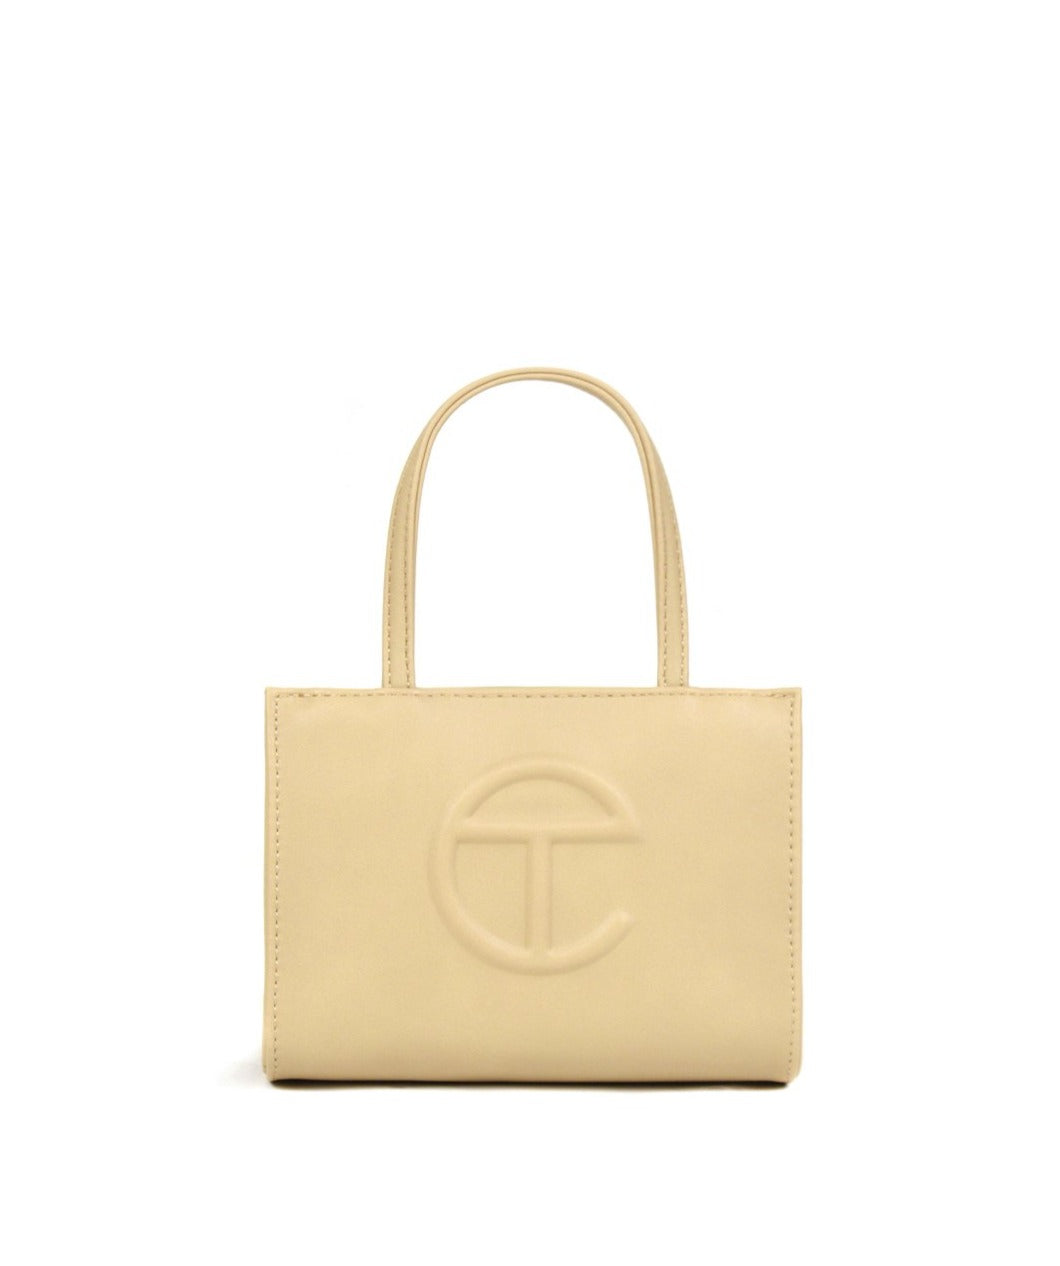 Telfar Small Shopping Bag in Cream